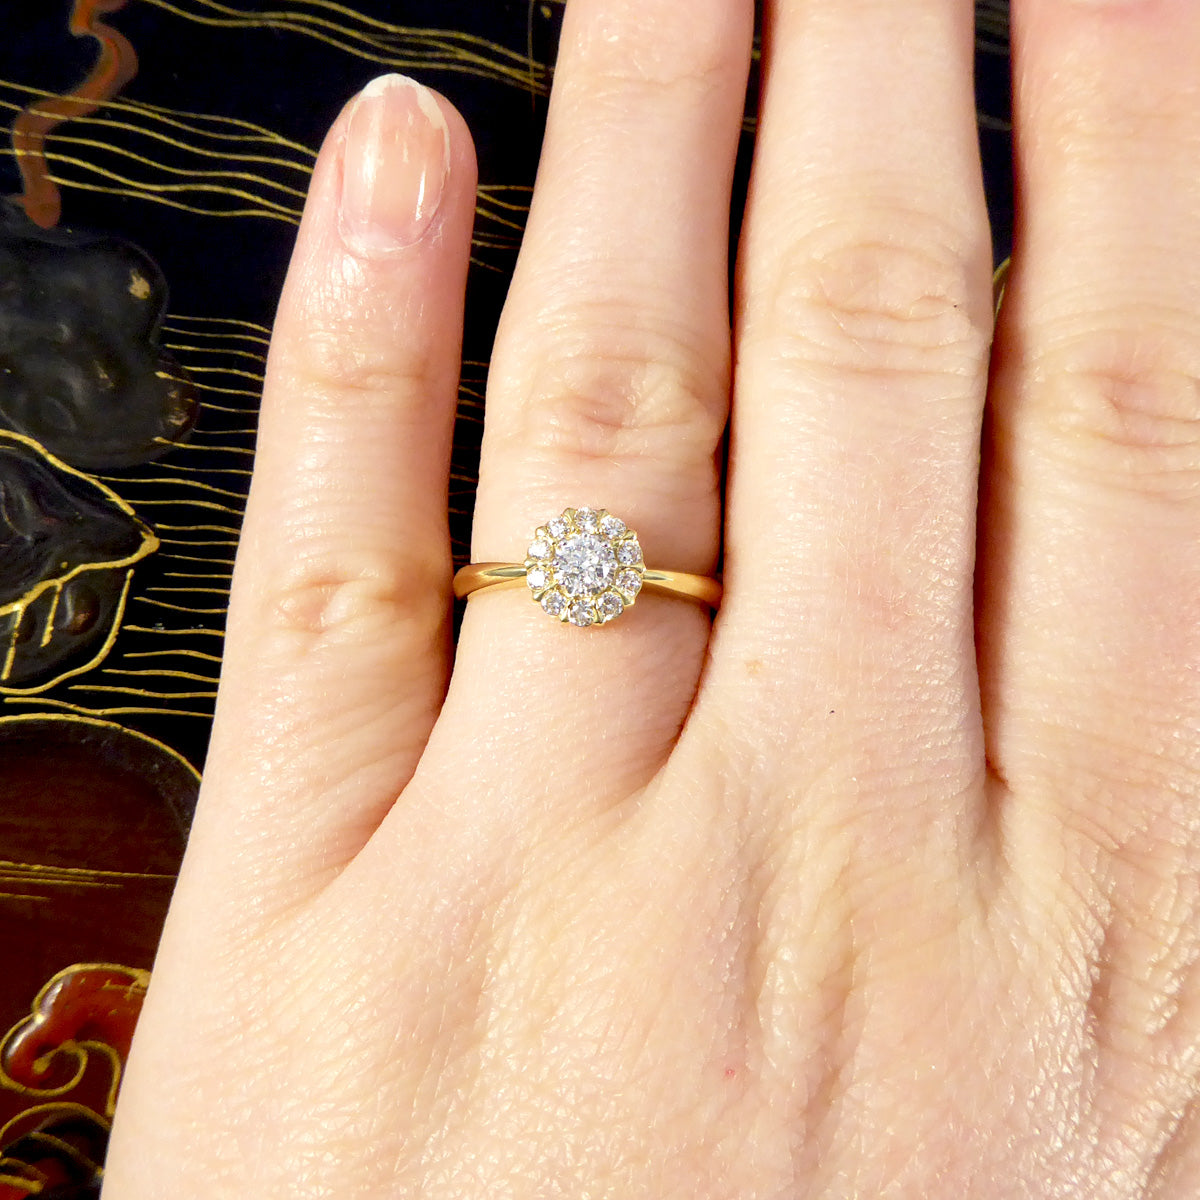 Elegant Daisy Diamond Cluster Ring in 18ct Yellow Gold